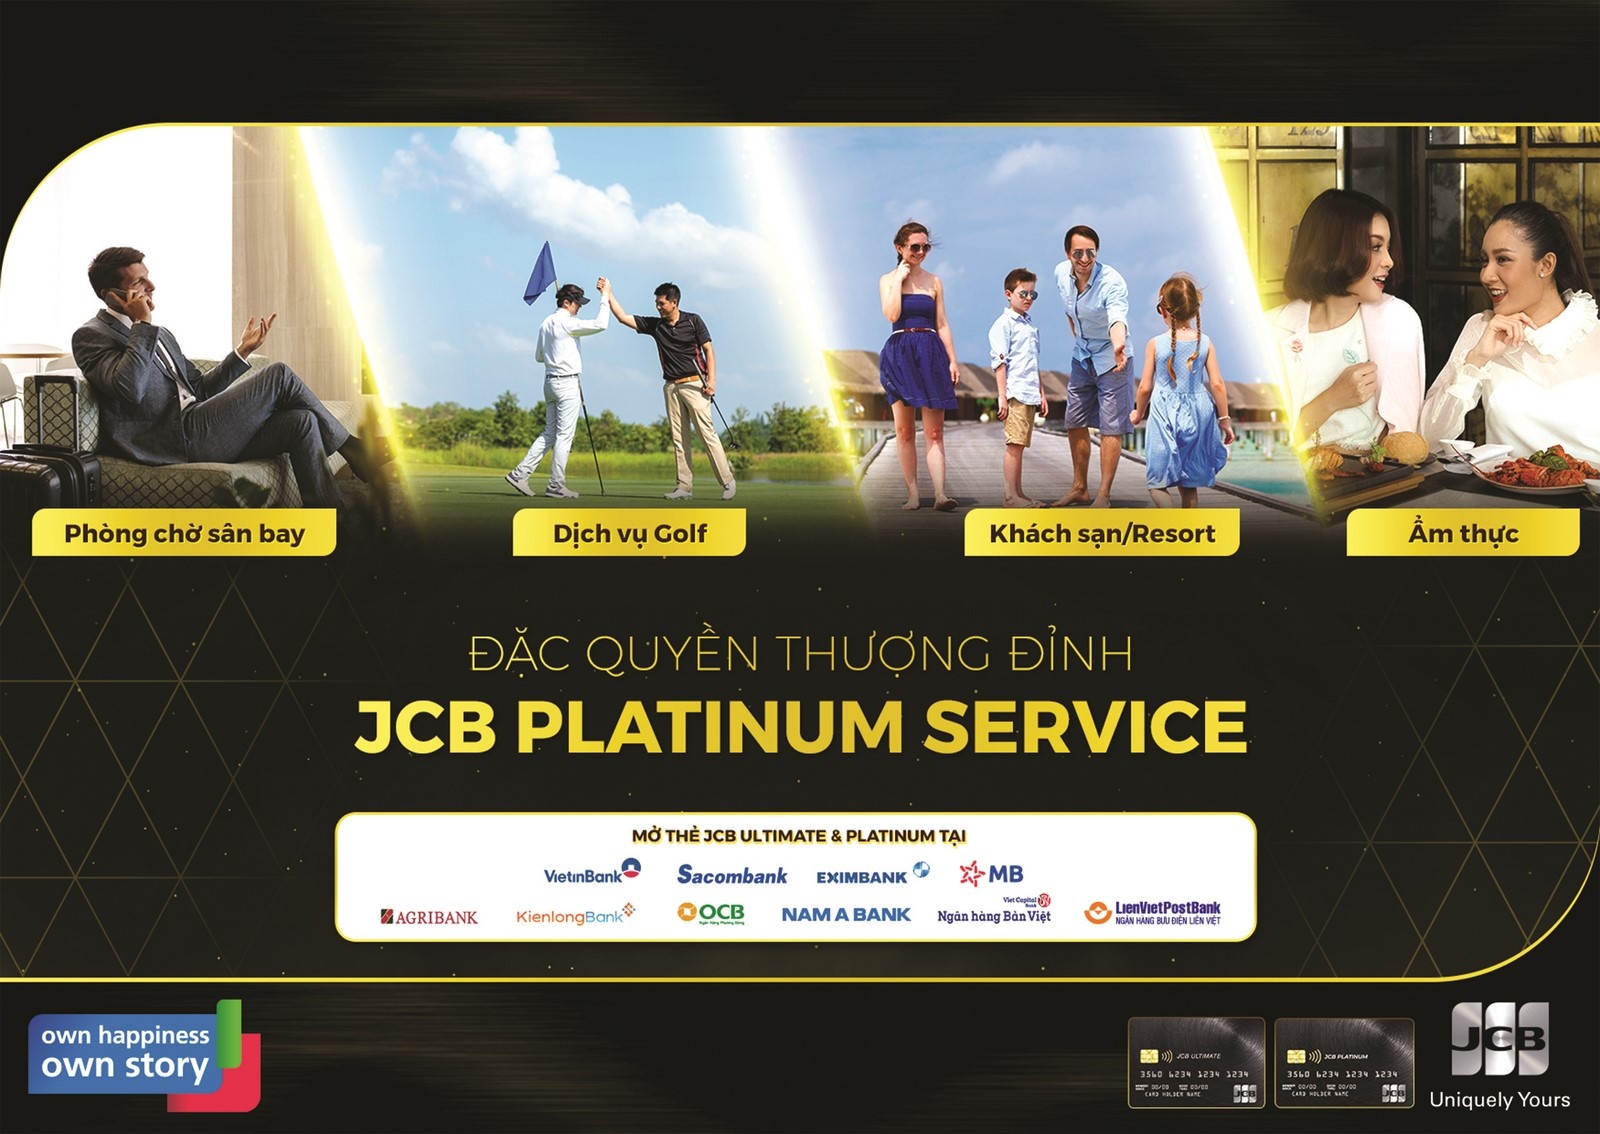 jcb platinum service dac quyen thuong dinh